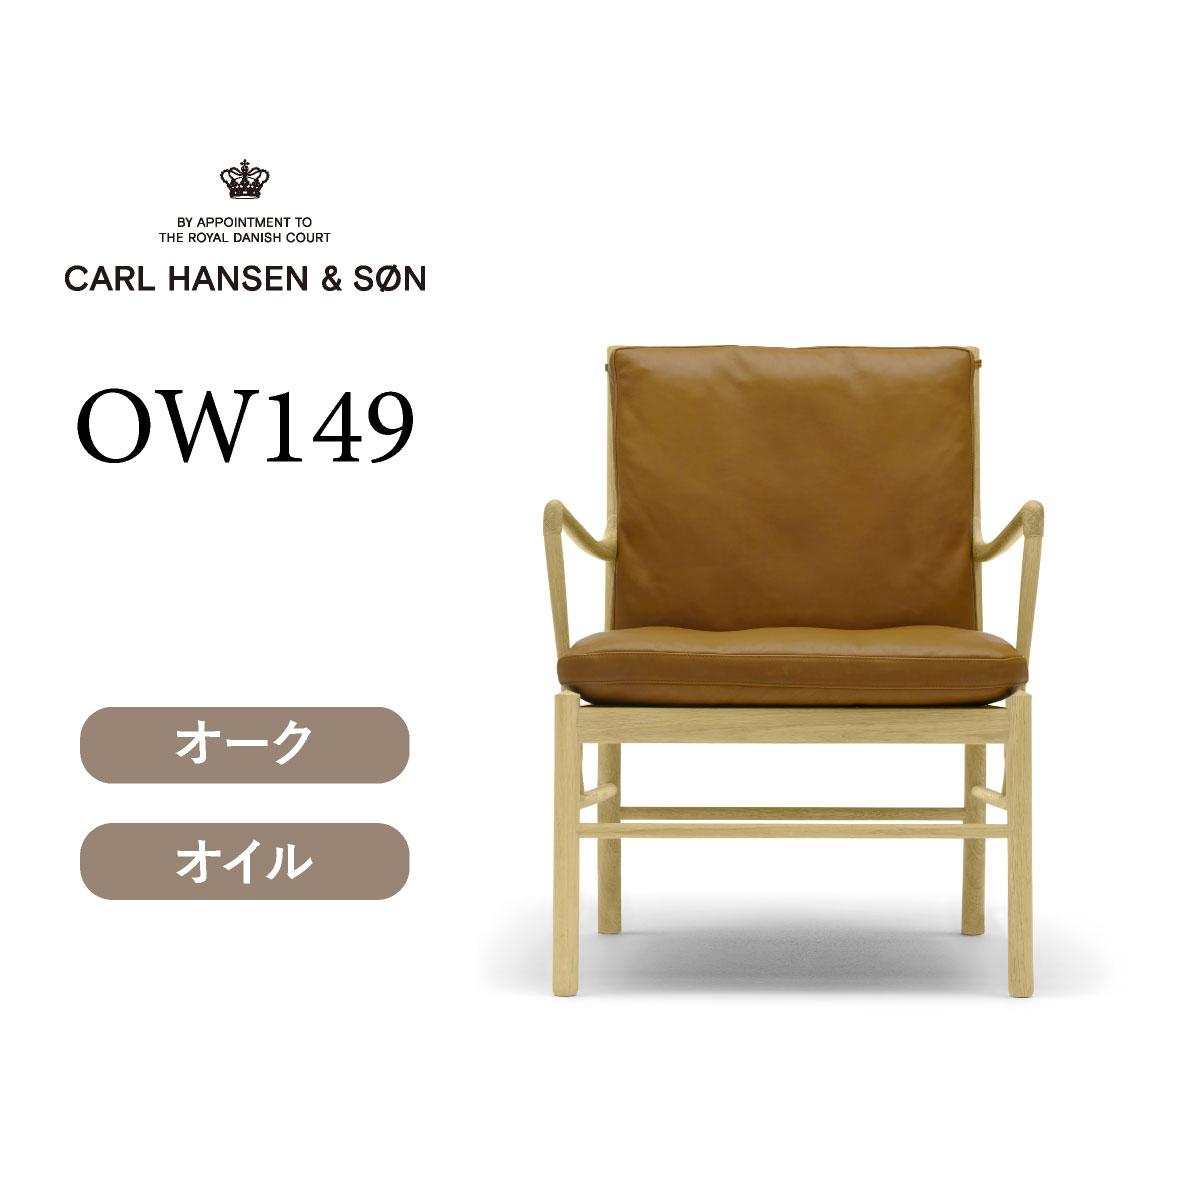 OW149 コロニアルチェア オーク オイルフィニッシュ THOR307（ライトブラウンレザー） CARL HANSEN & SON （カールハンセン)